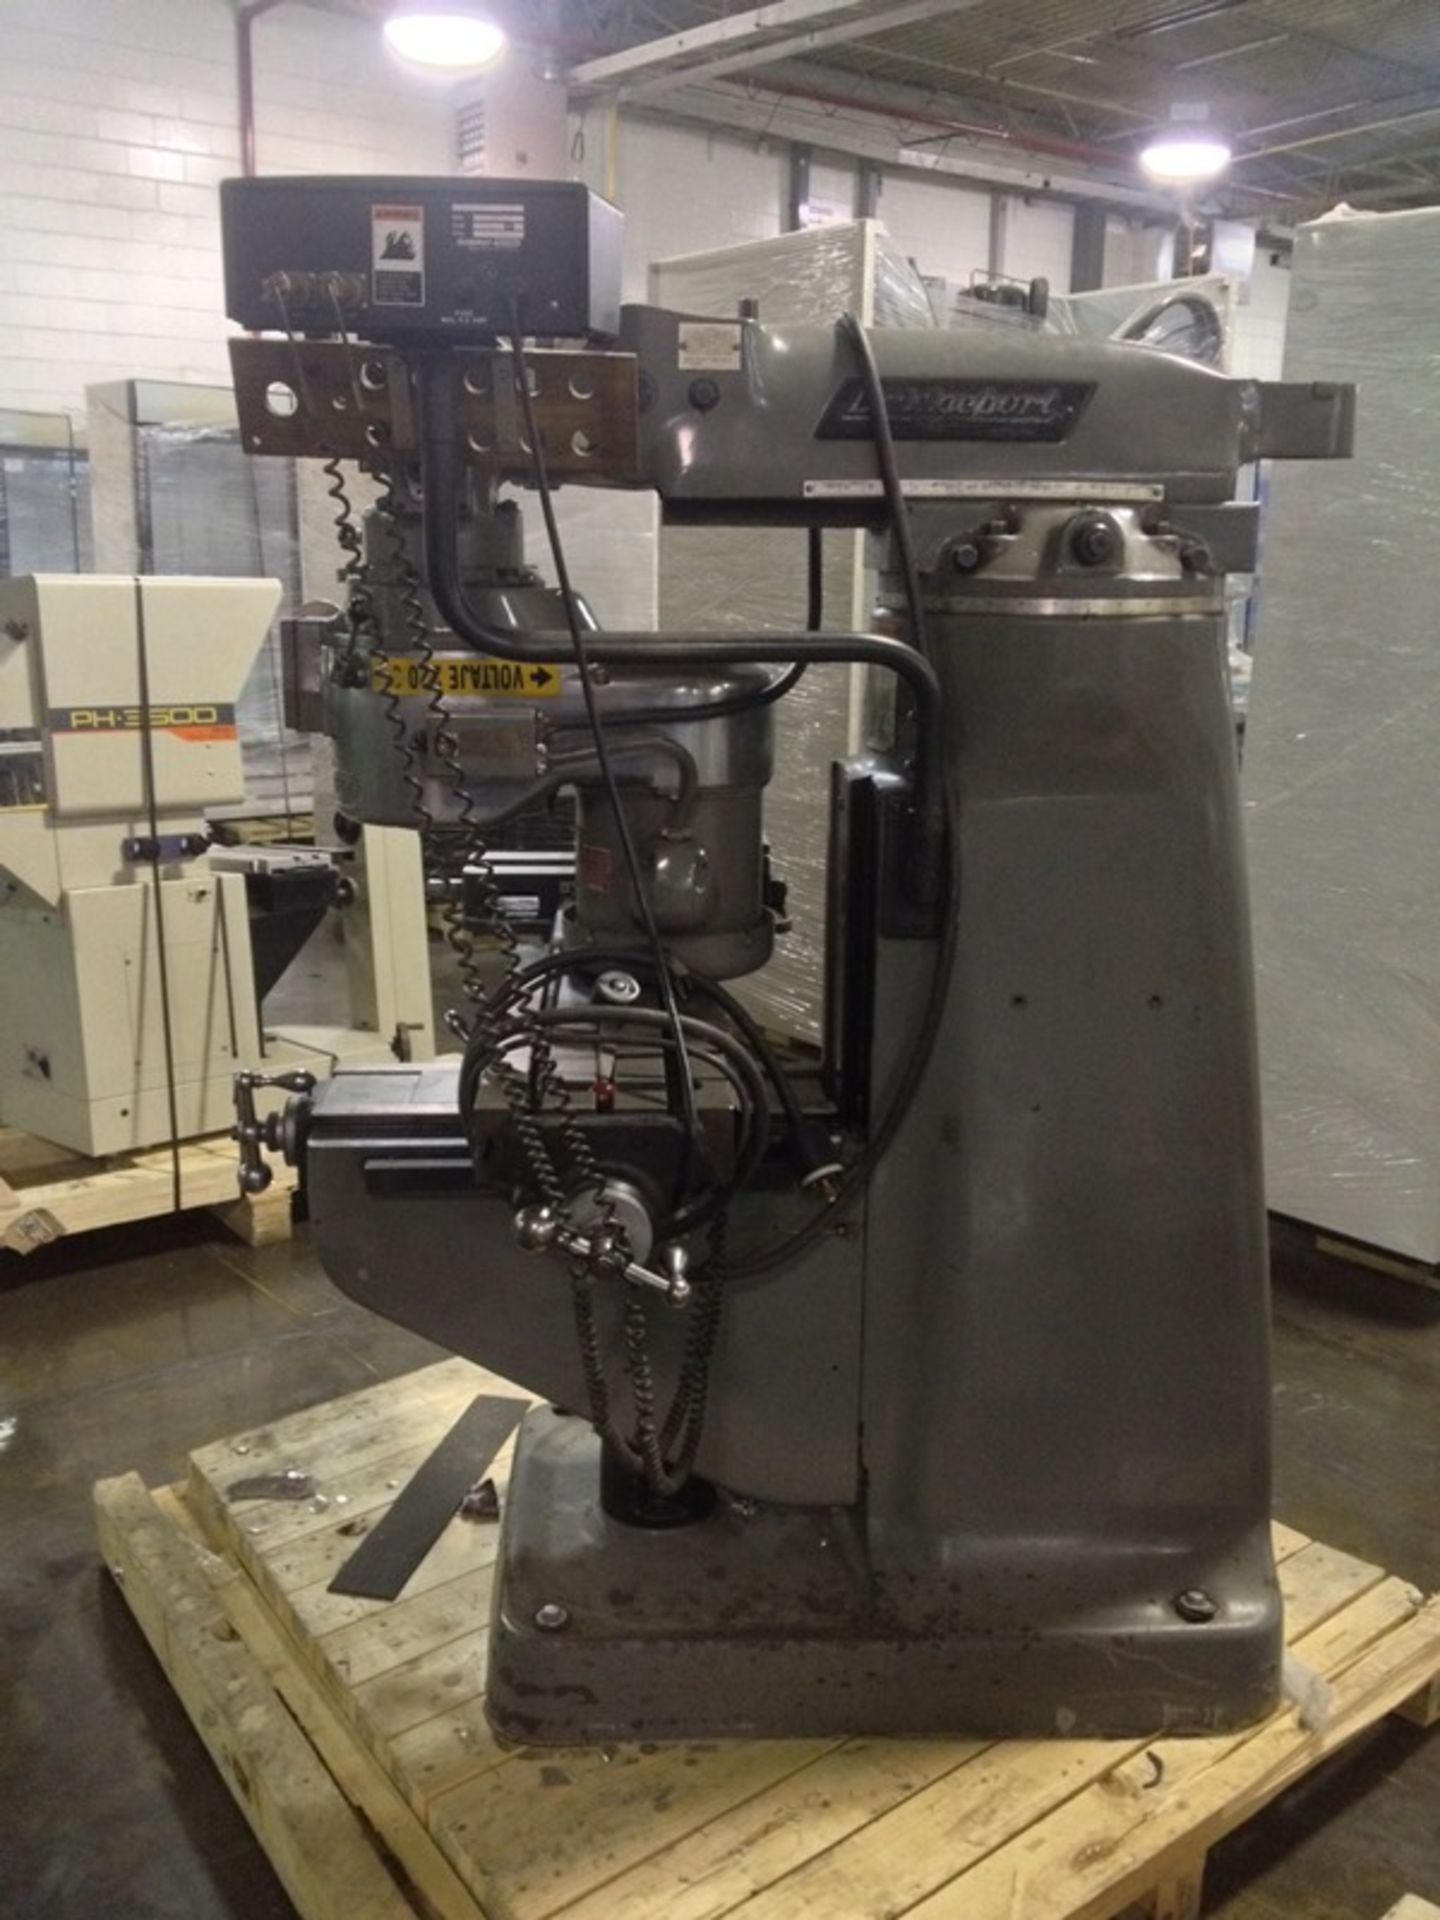 2HP Milling Machine, Brand: Bridgeport, Series: 2J 123204-2. Condition: Good, Location: Cd. Juarez - Image 6 of 20